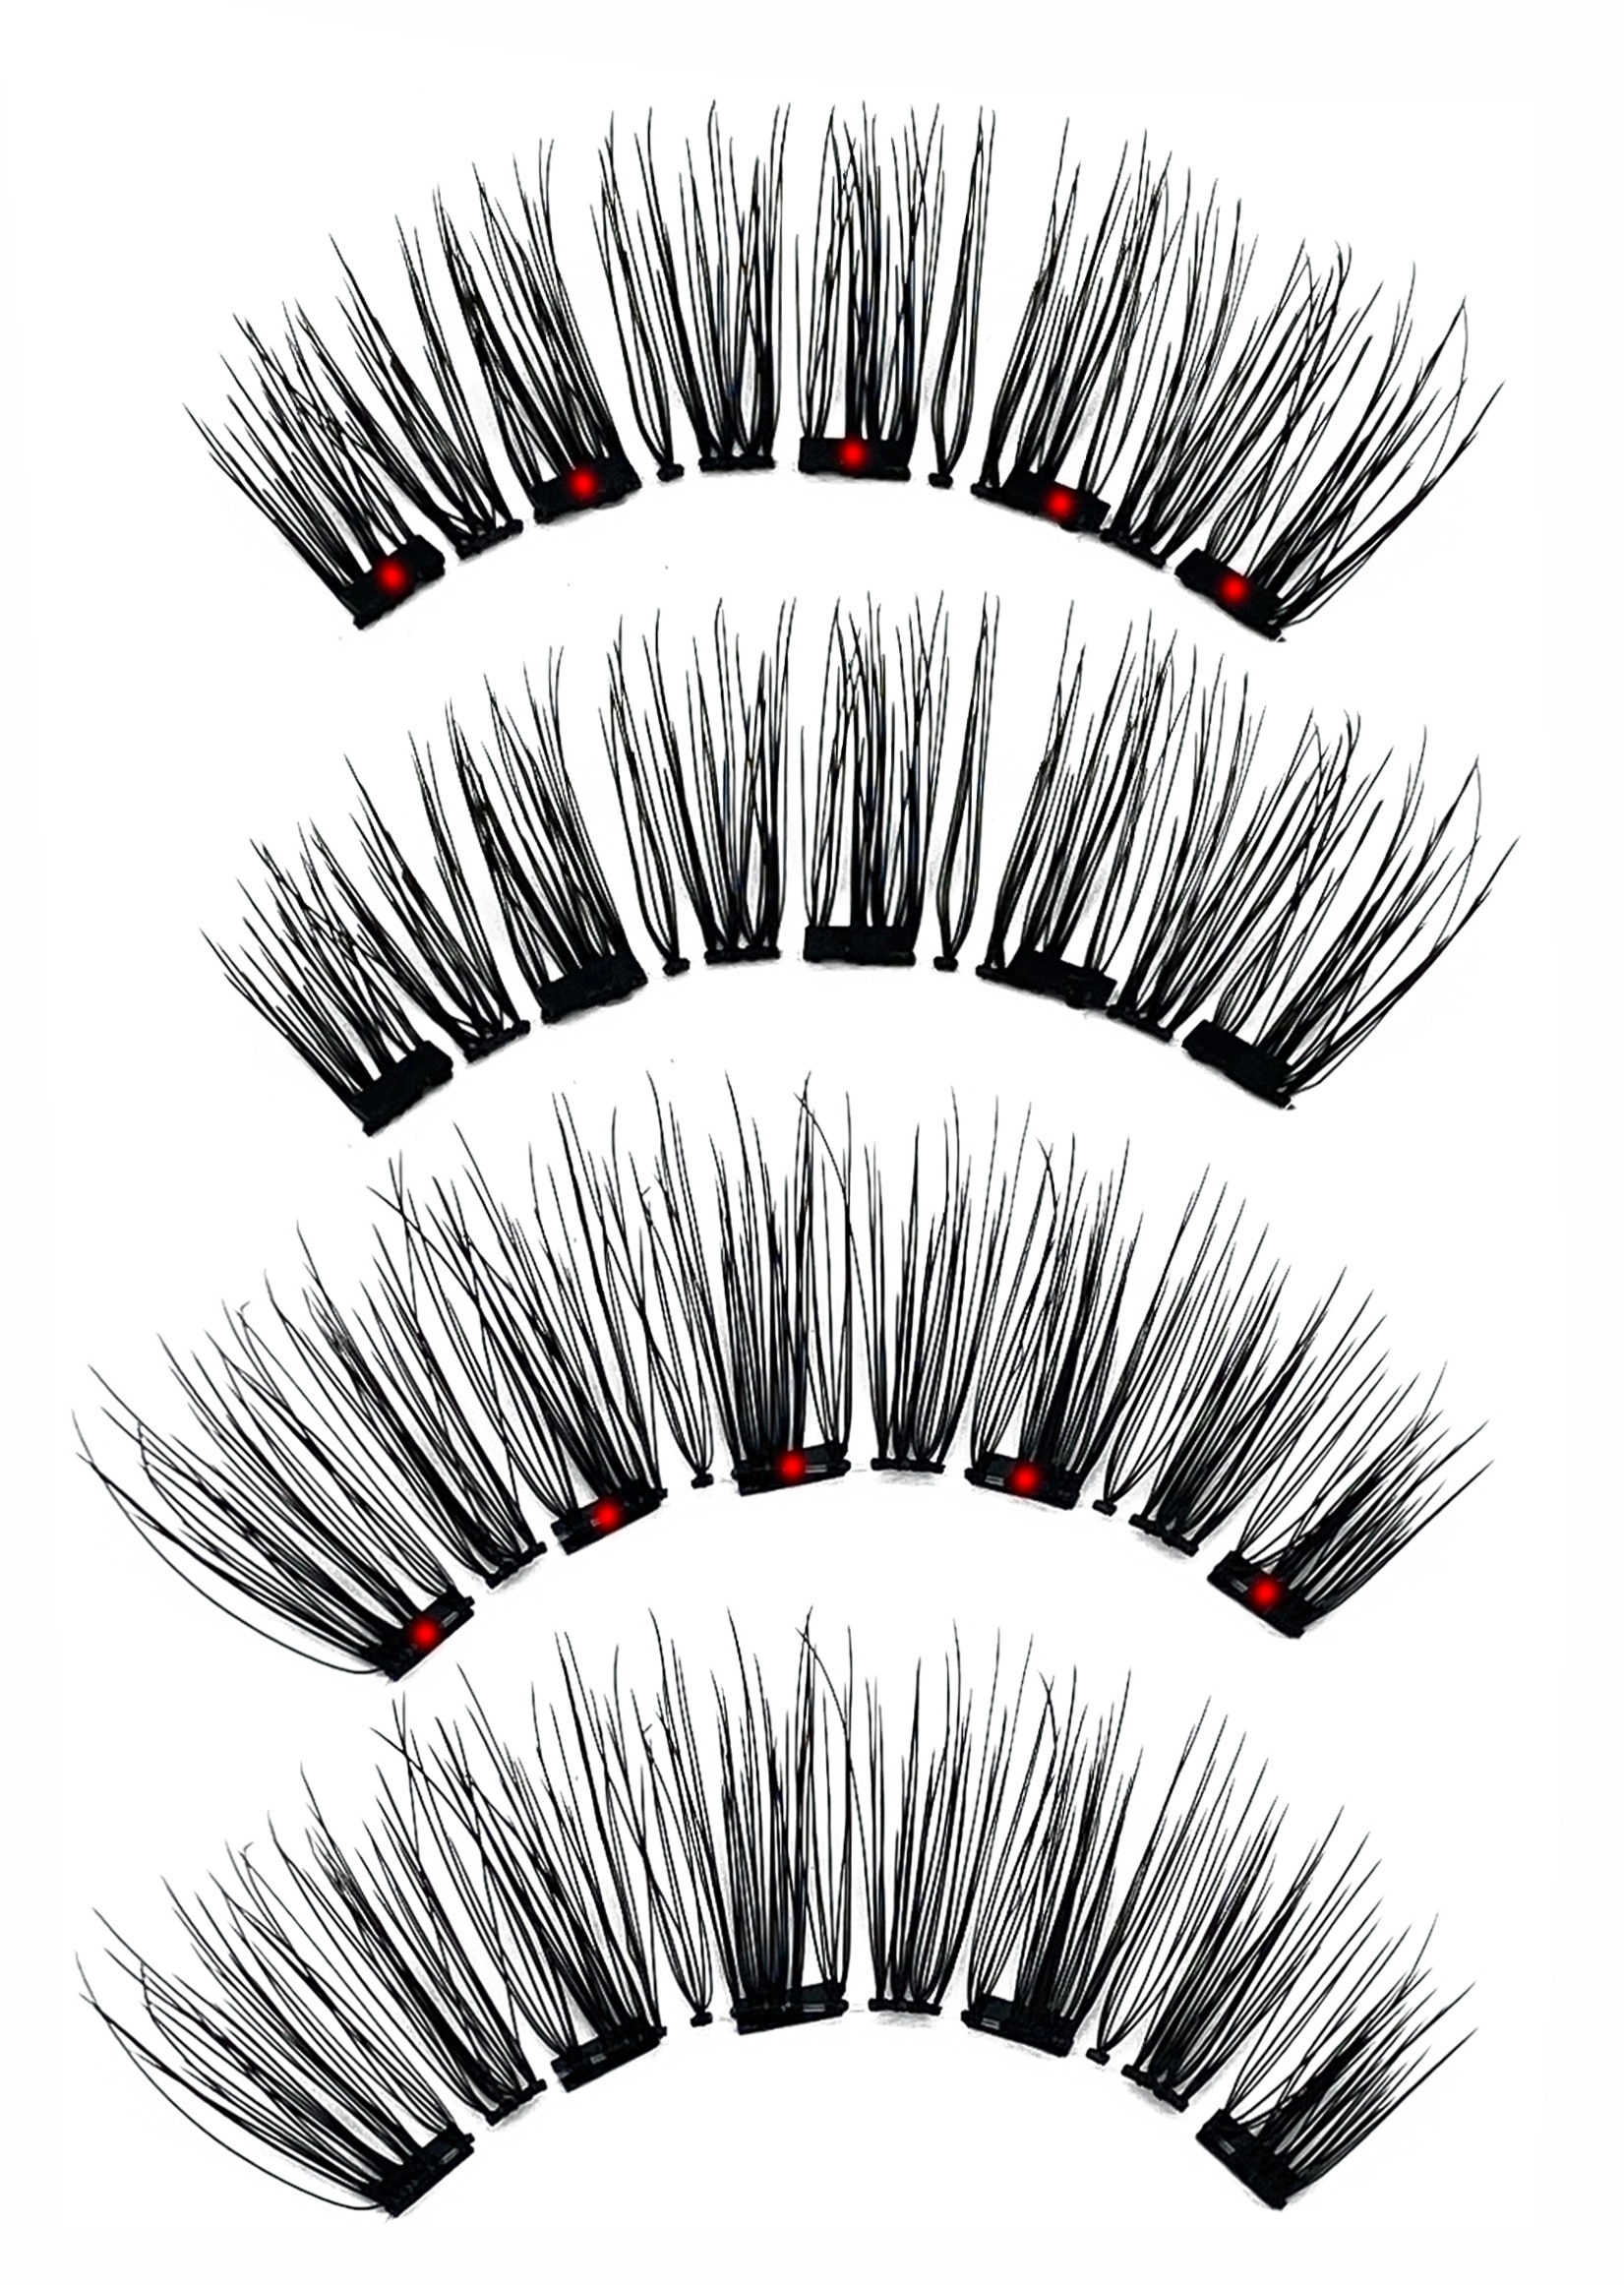 MB Magnetic Eyelashes with 5 Magnets Handmade Reusable 3D Mink False Eyelashes for Makeup faux cils magnetique naturel Tweezers